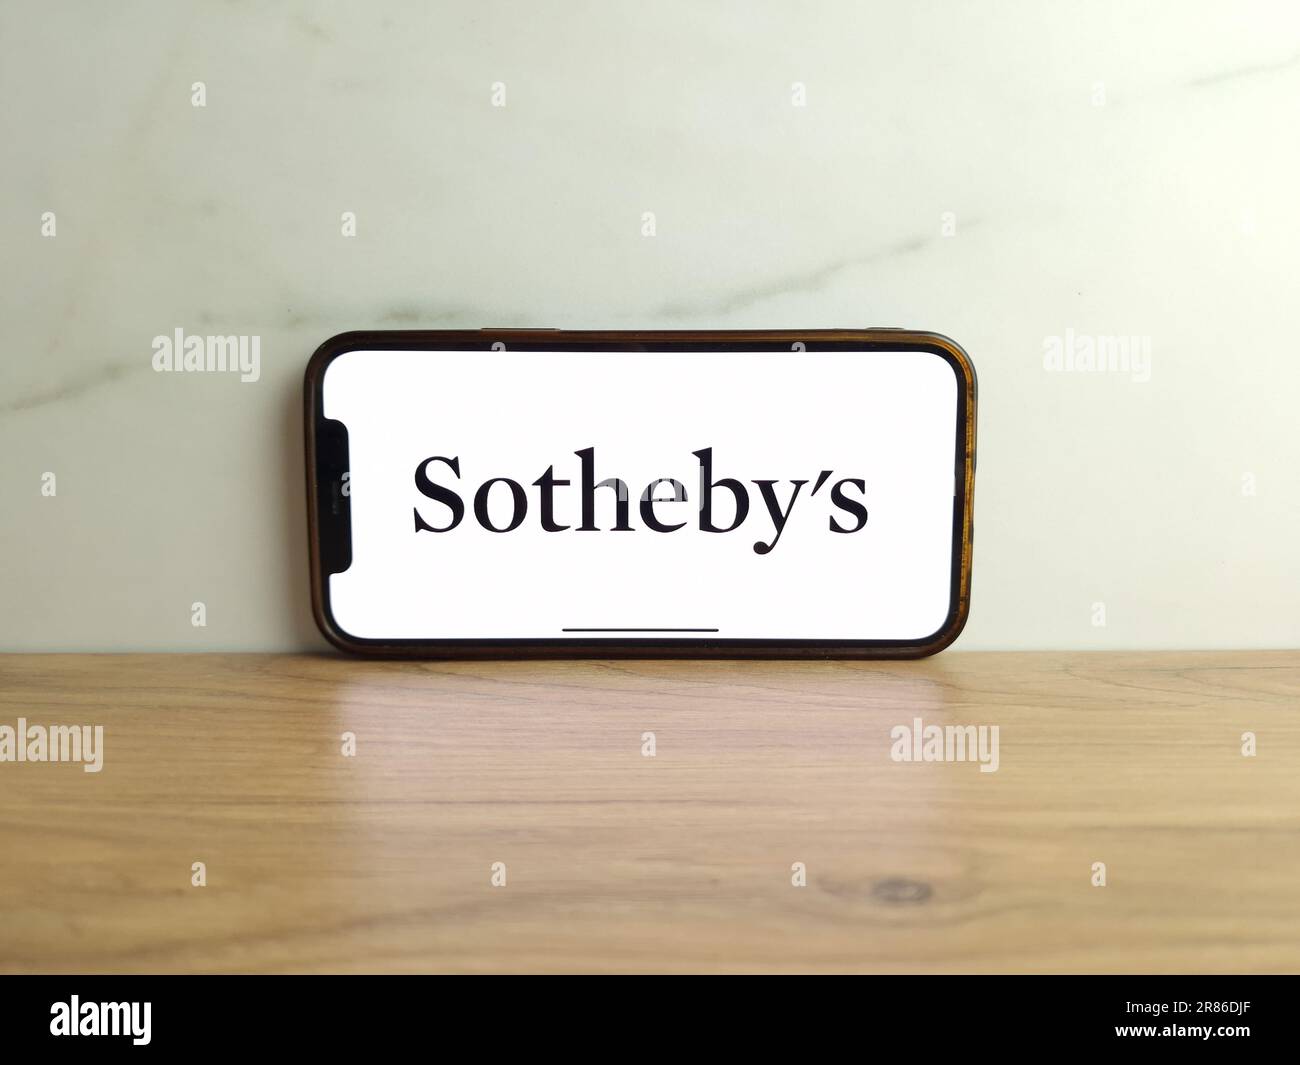 Konskie, Poland - June 17, 2023: Sothebys auction house logo displayed on mobile phone screen Stock Photo